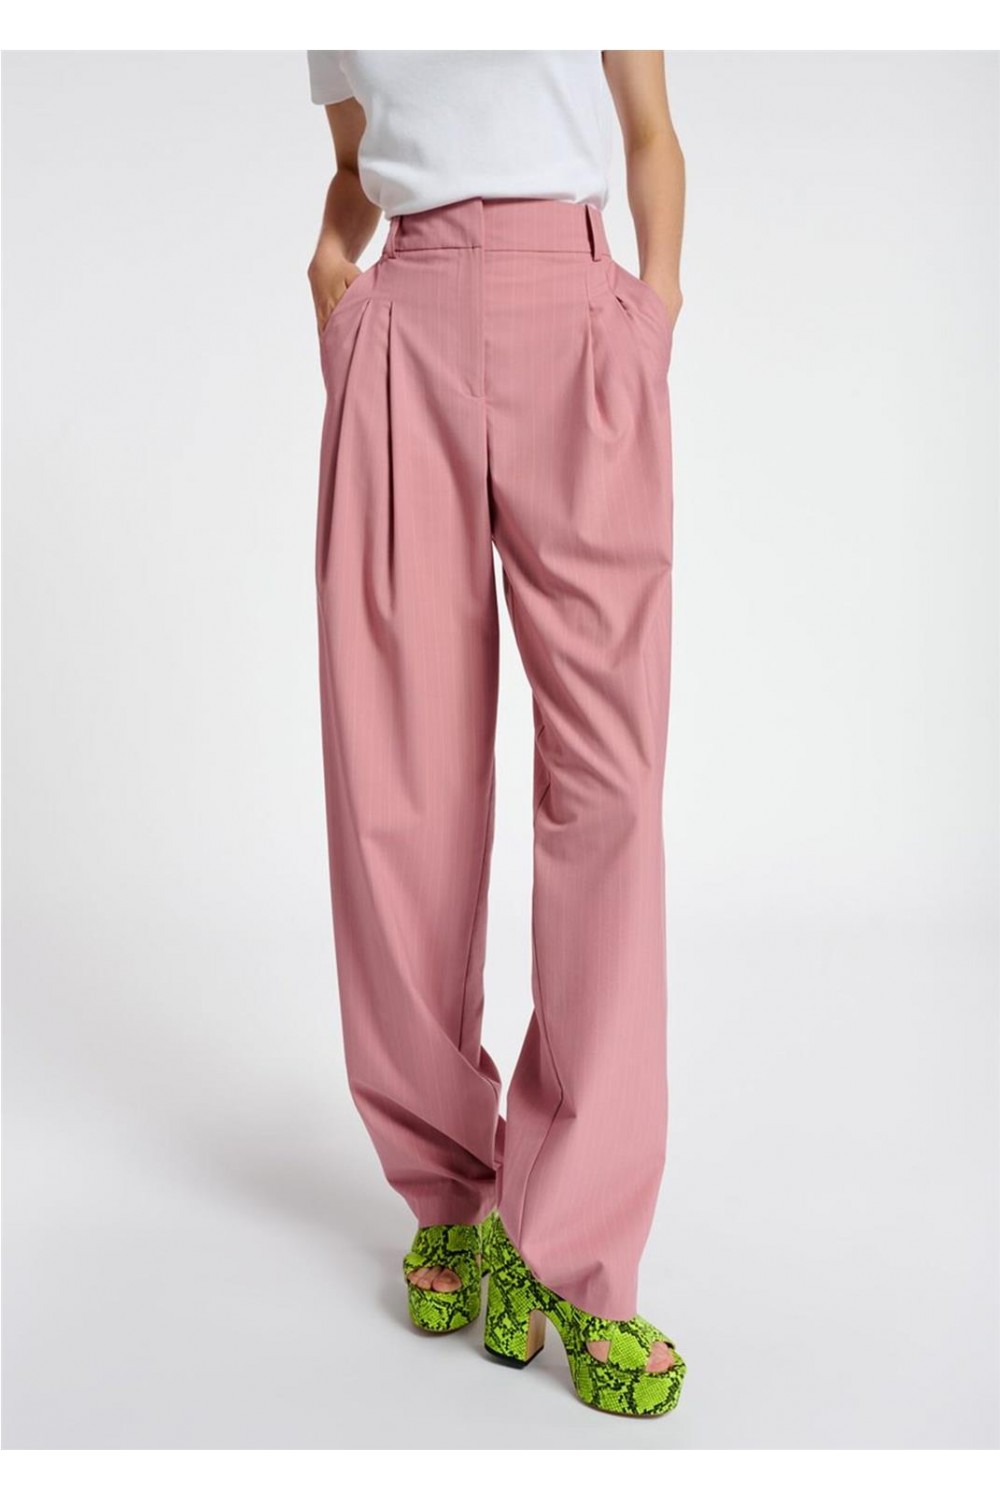 Pantalón vestir Duchamp Essentiel Color ROSA Talla